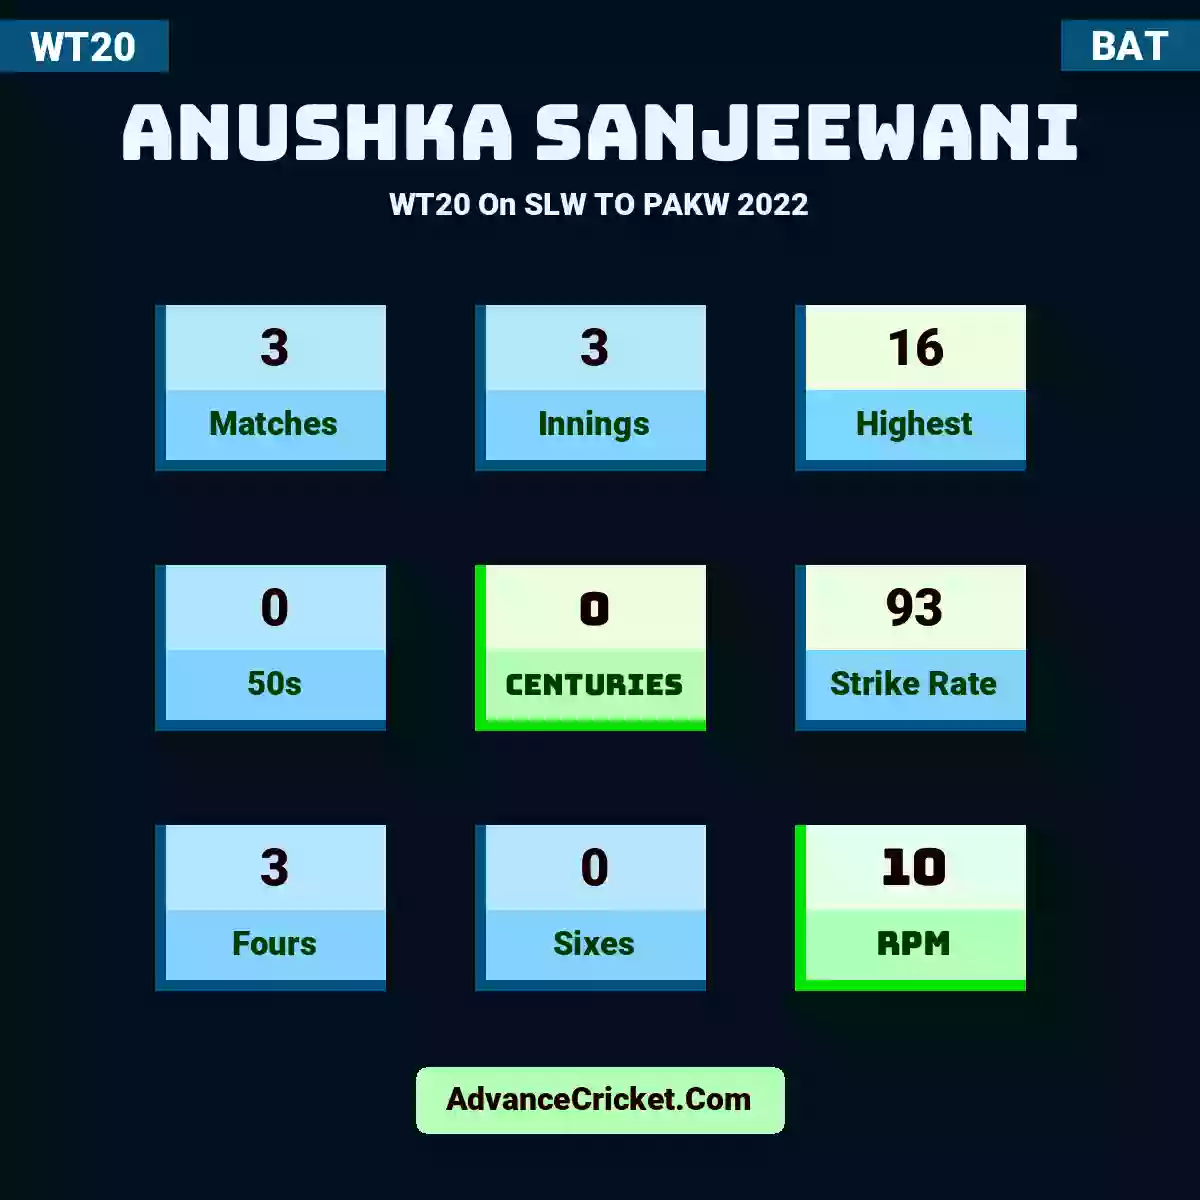 Anushka Sanjeewani WT20  On SLW TO PAKW 2022, Anushka Sanjeewani played 3 matches, scored 16 runs as highest, 0 half-centuries, and 0 centuries, with a strike rate of 93. A.Sanjeewani hit 3 fours and 0 sixes, with an RPM of 10.